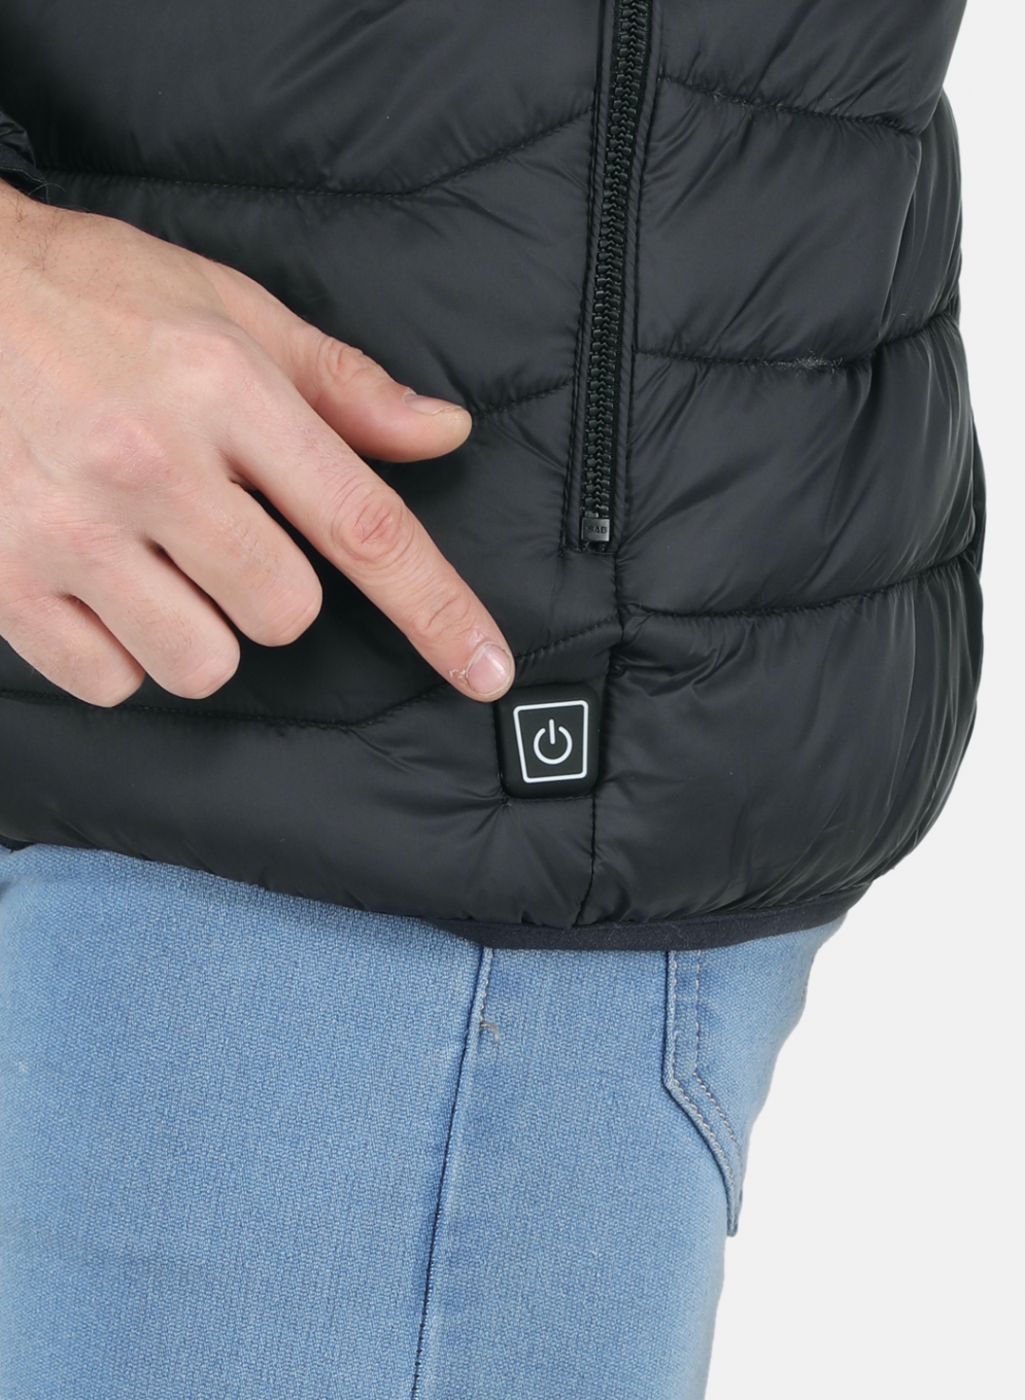 Self-heating ski jacket